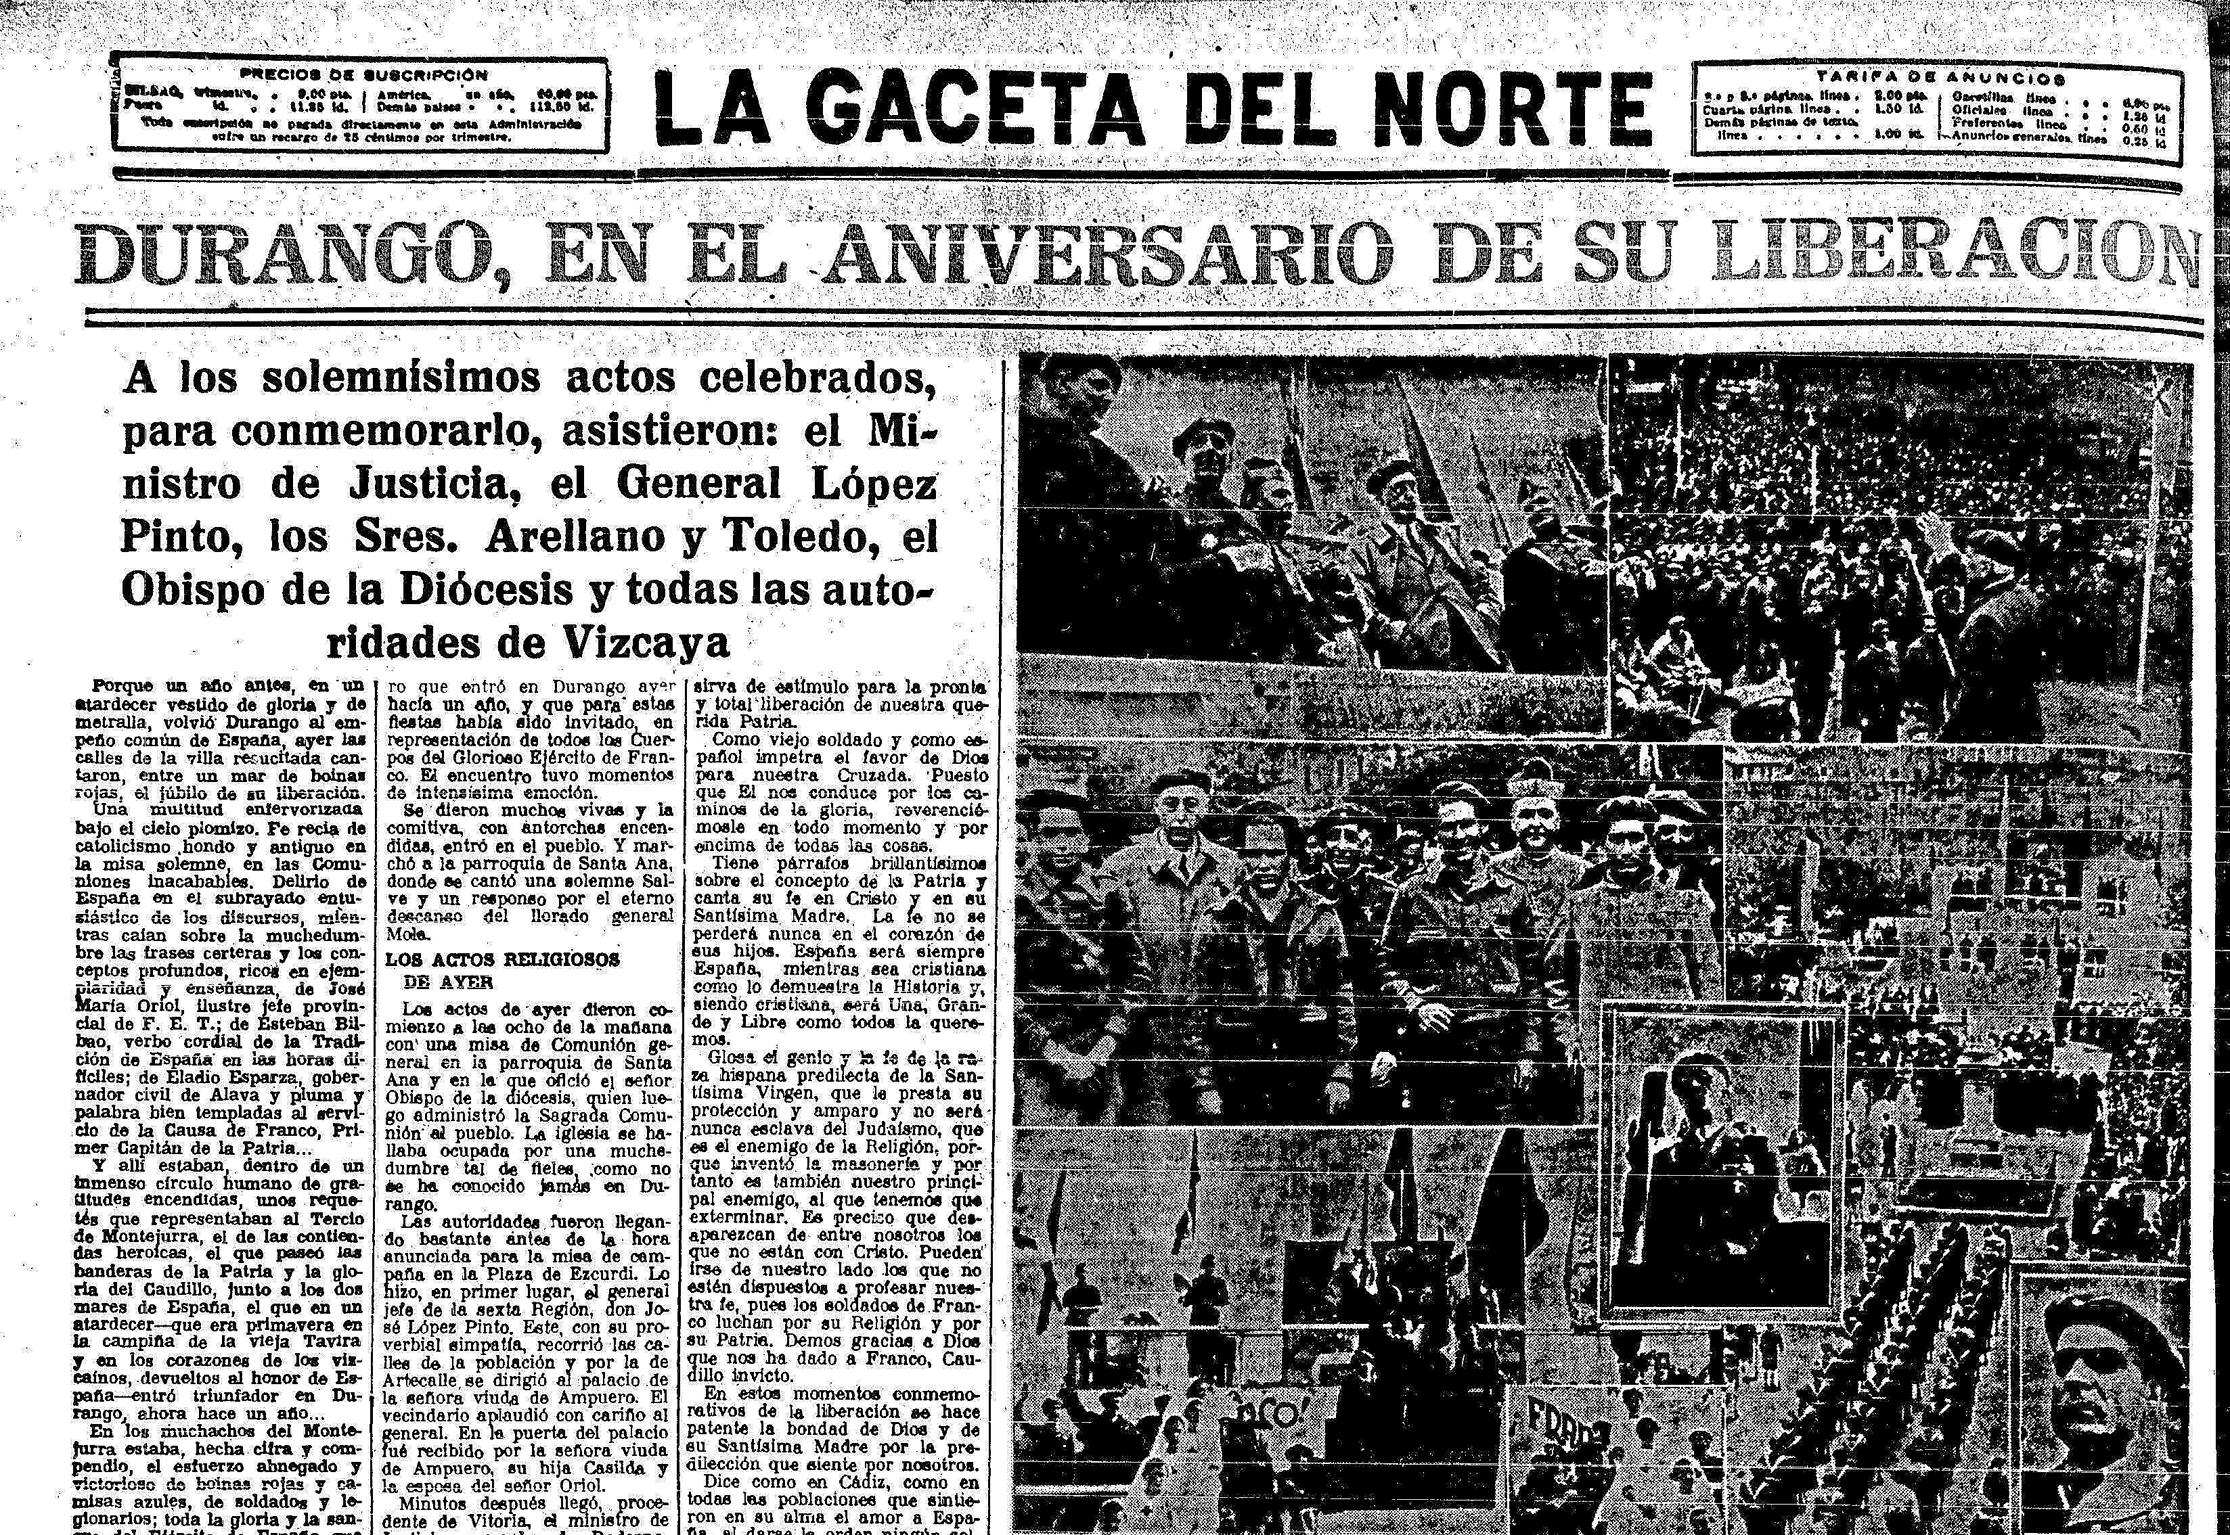 1938-04-29 - La Gaceta del Norte